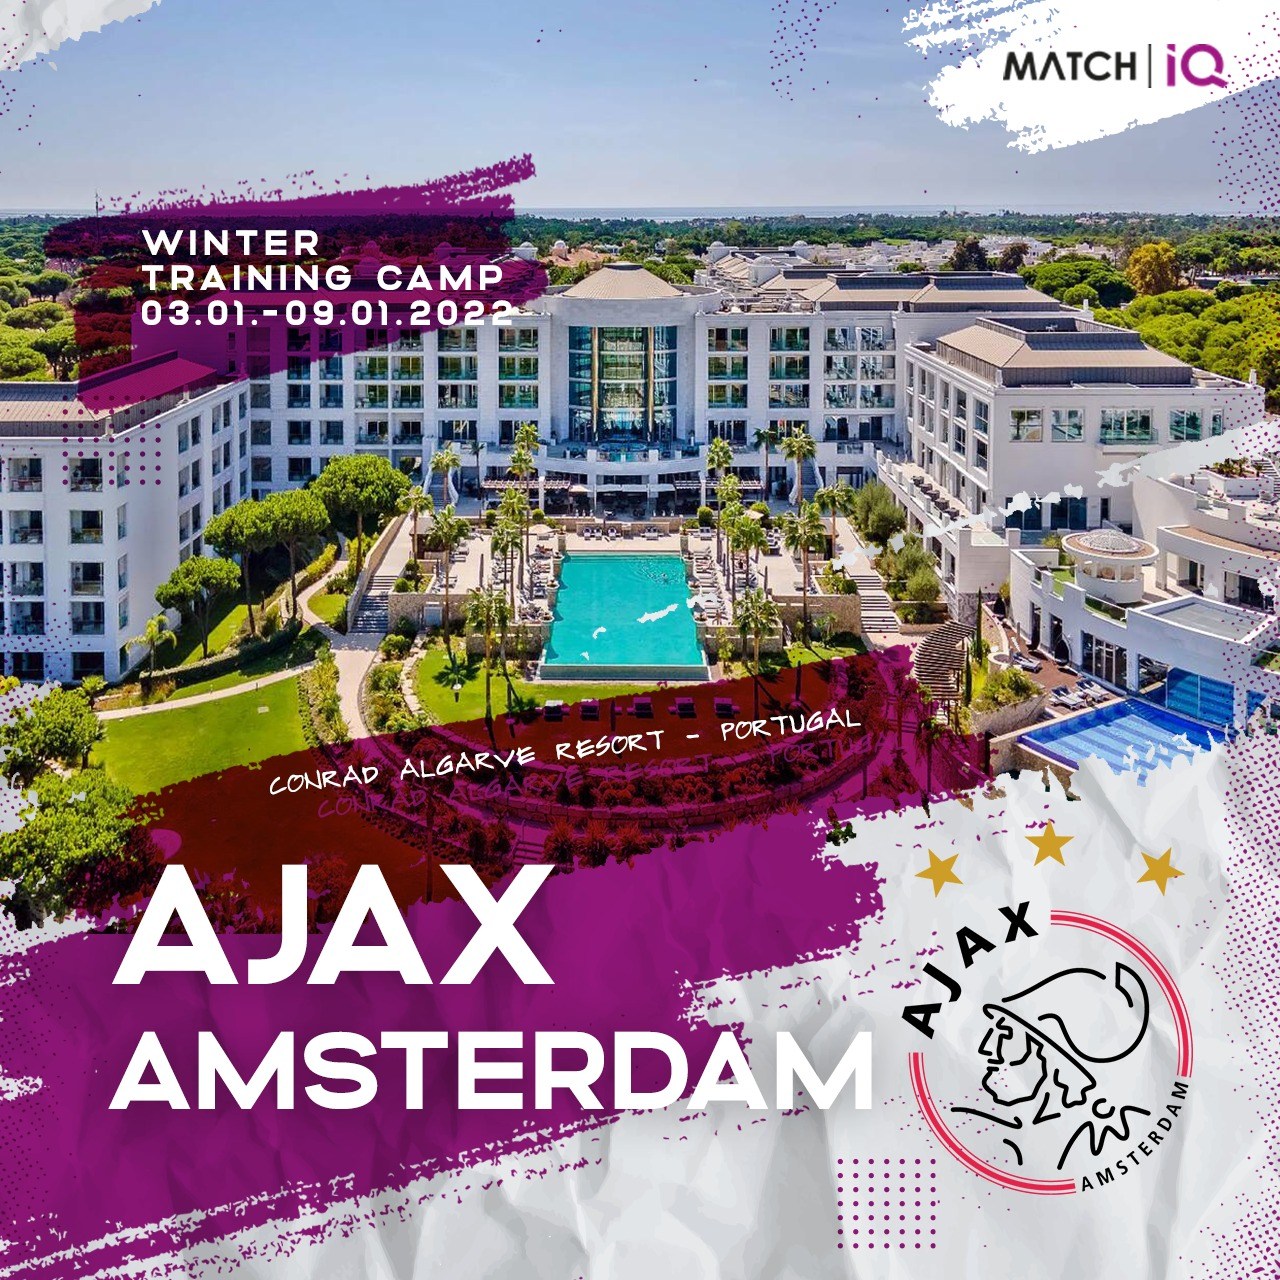 Ajax Amsterdam with Match IQ in Portugal